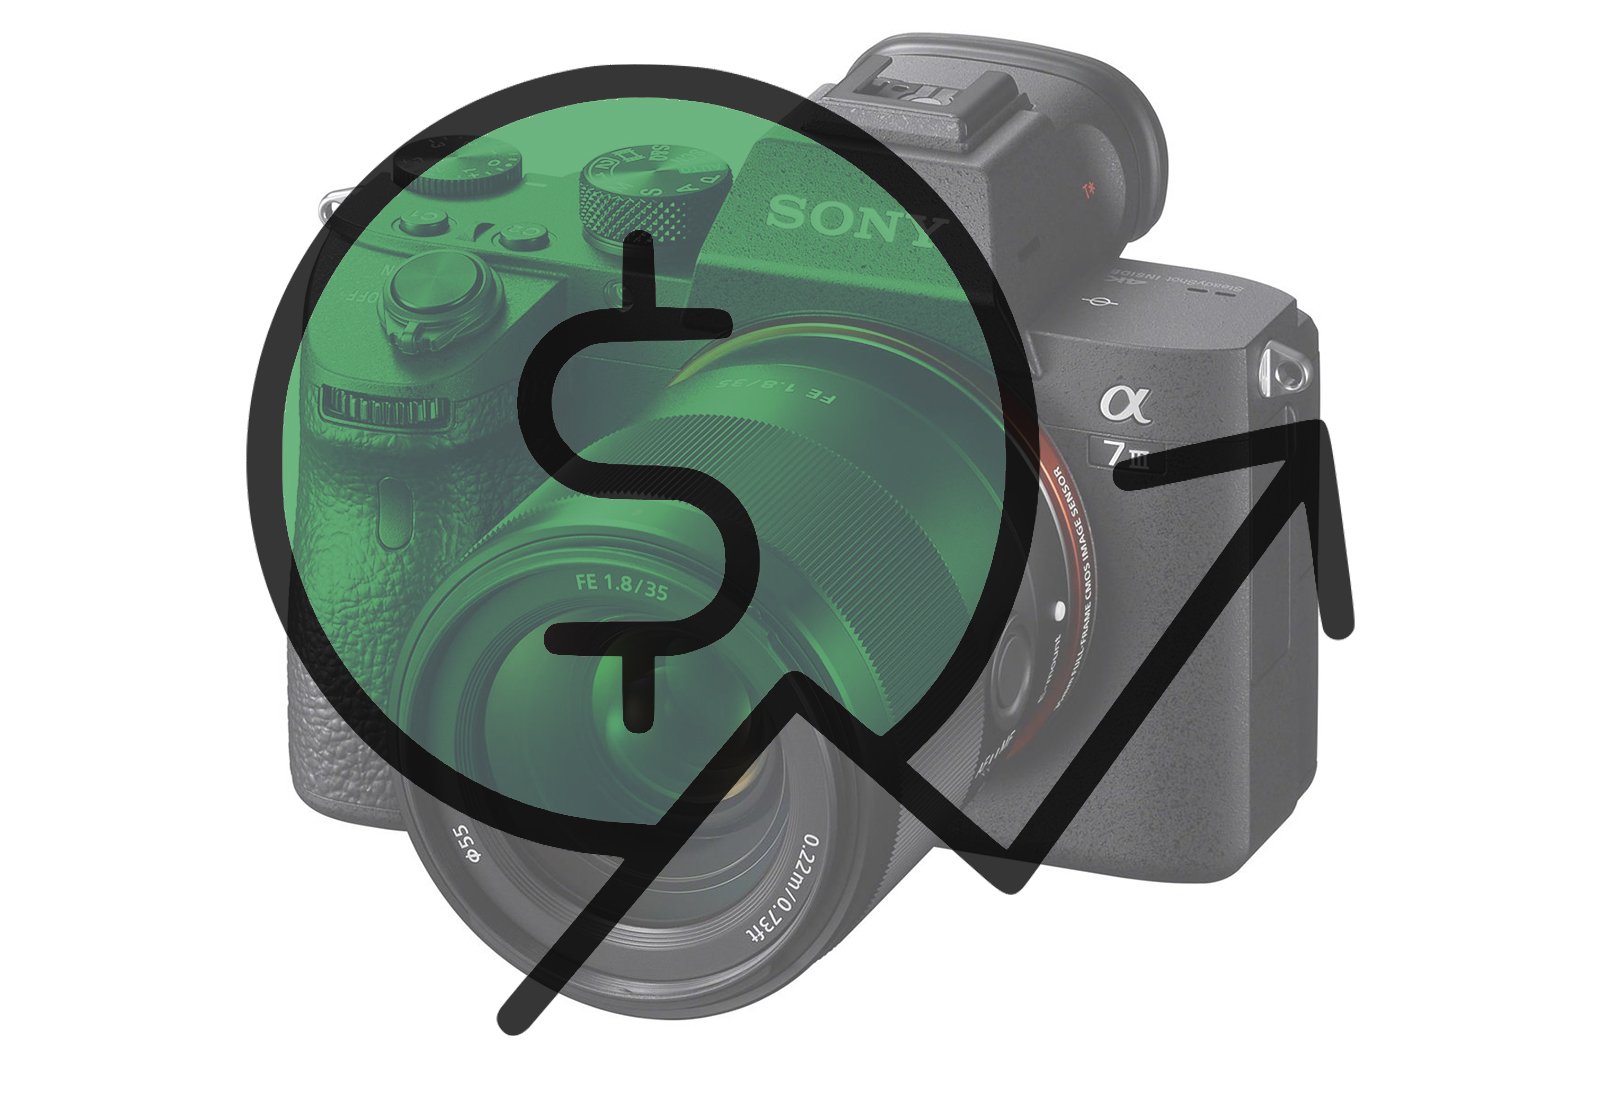  sony lens 